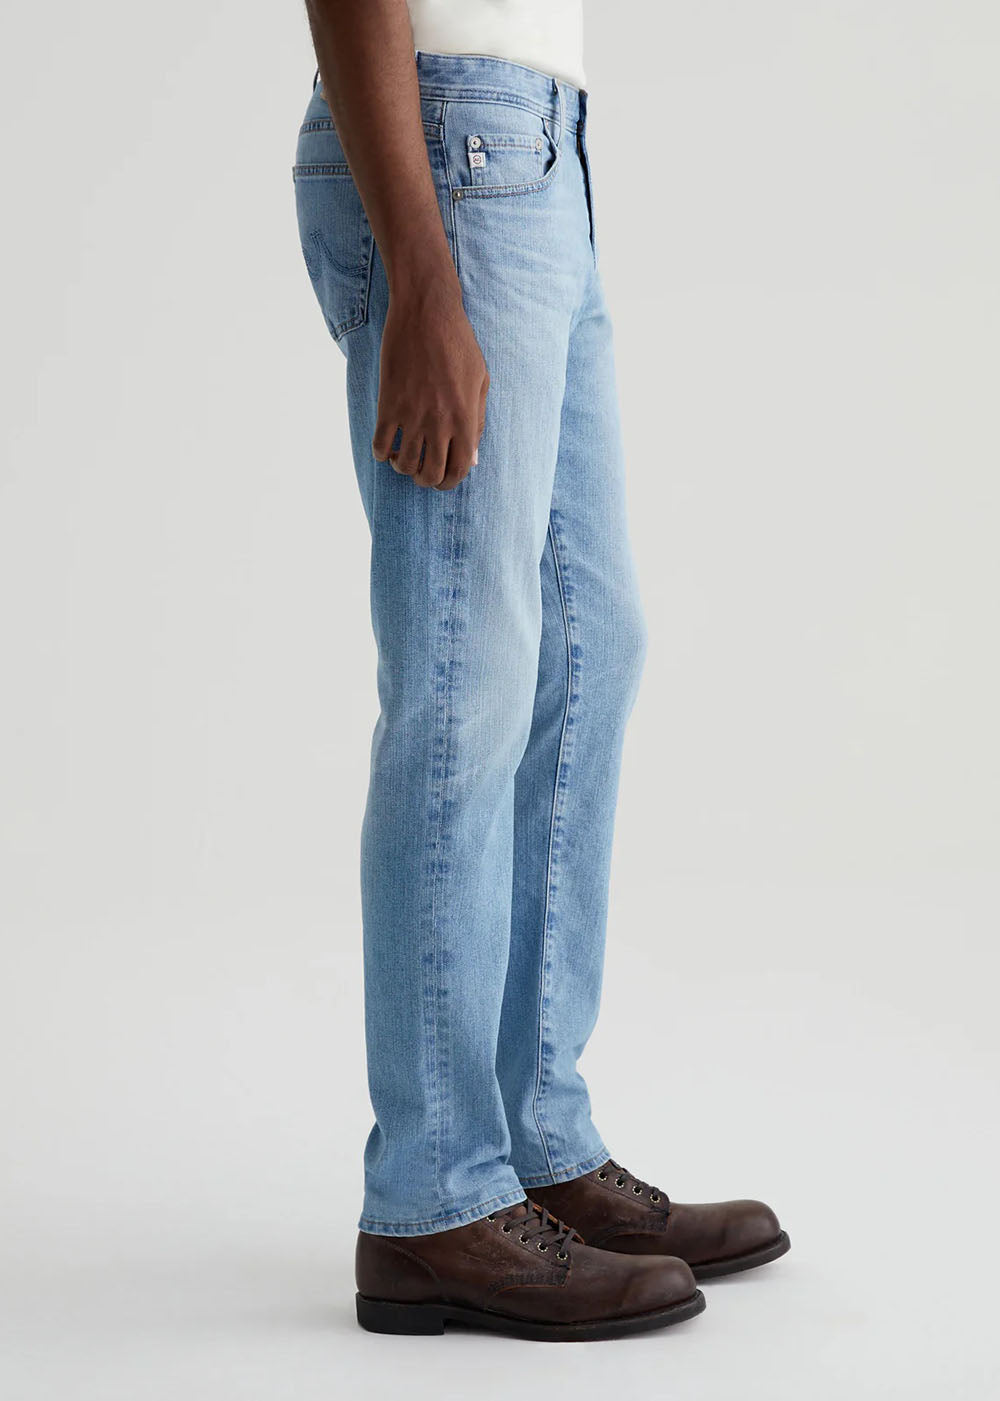 Tellis Modern Slim Jean - 21 Years Wilcox - AG Jeans Canada - Danali - 1783LED21YWCX